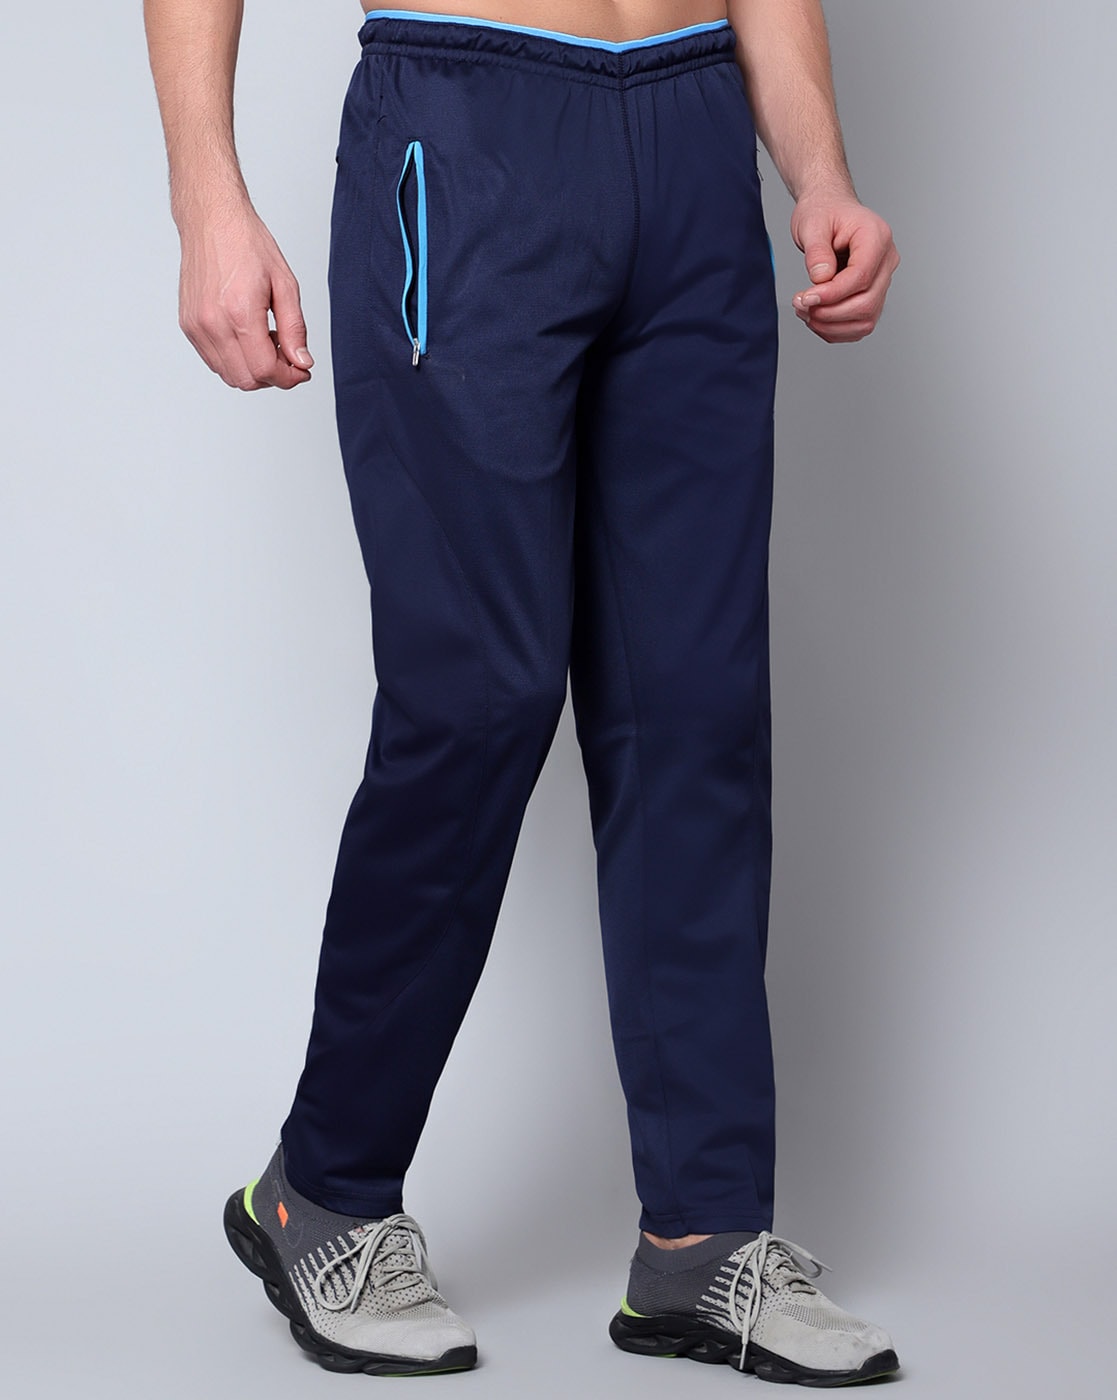 NAVY BLUE TRACK PANTS – Uniform Solutions | Buy School Uniform